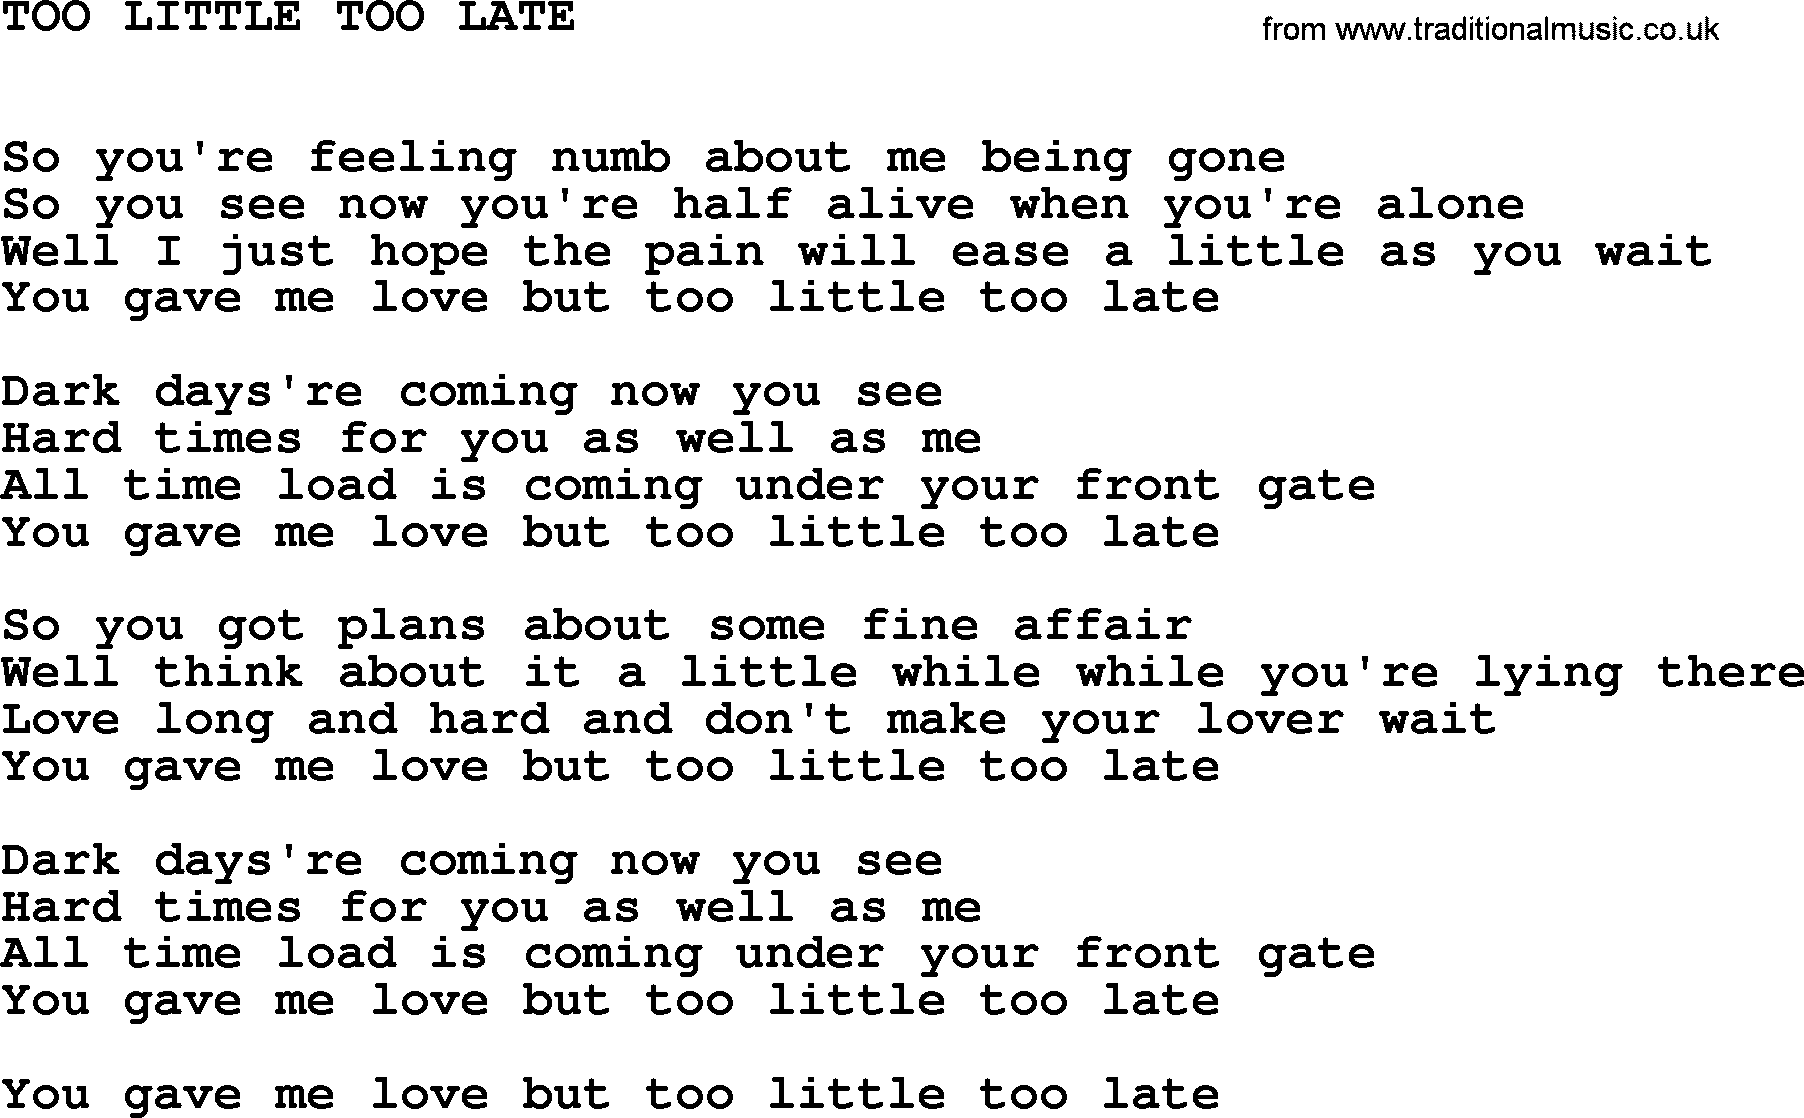 Johnny Cash song Too Little Too Late.txt lyrics